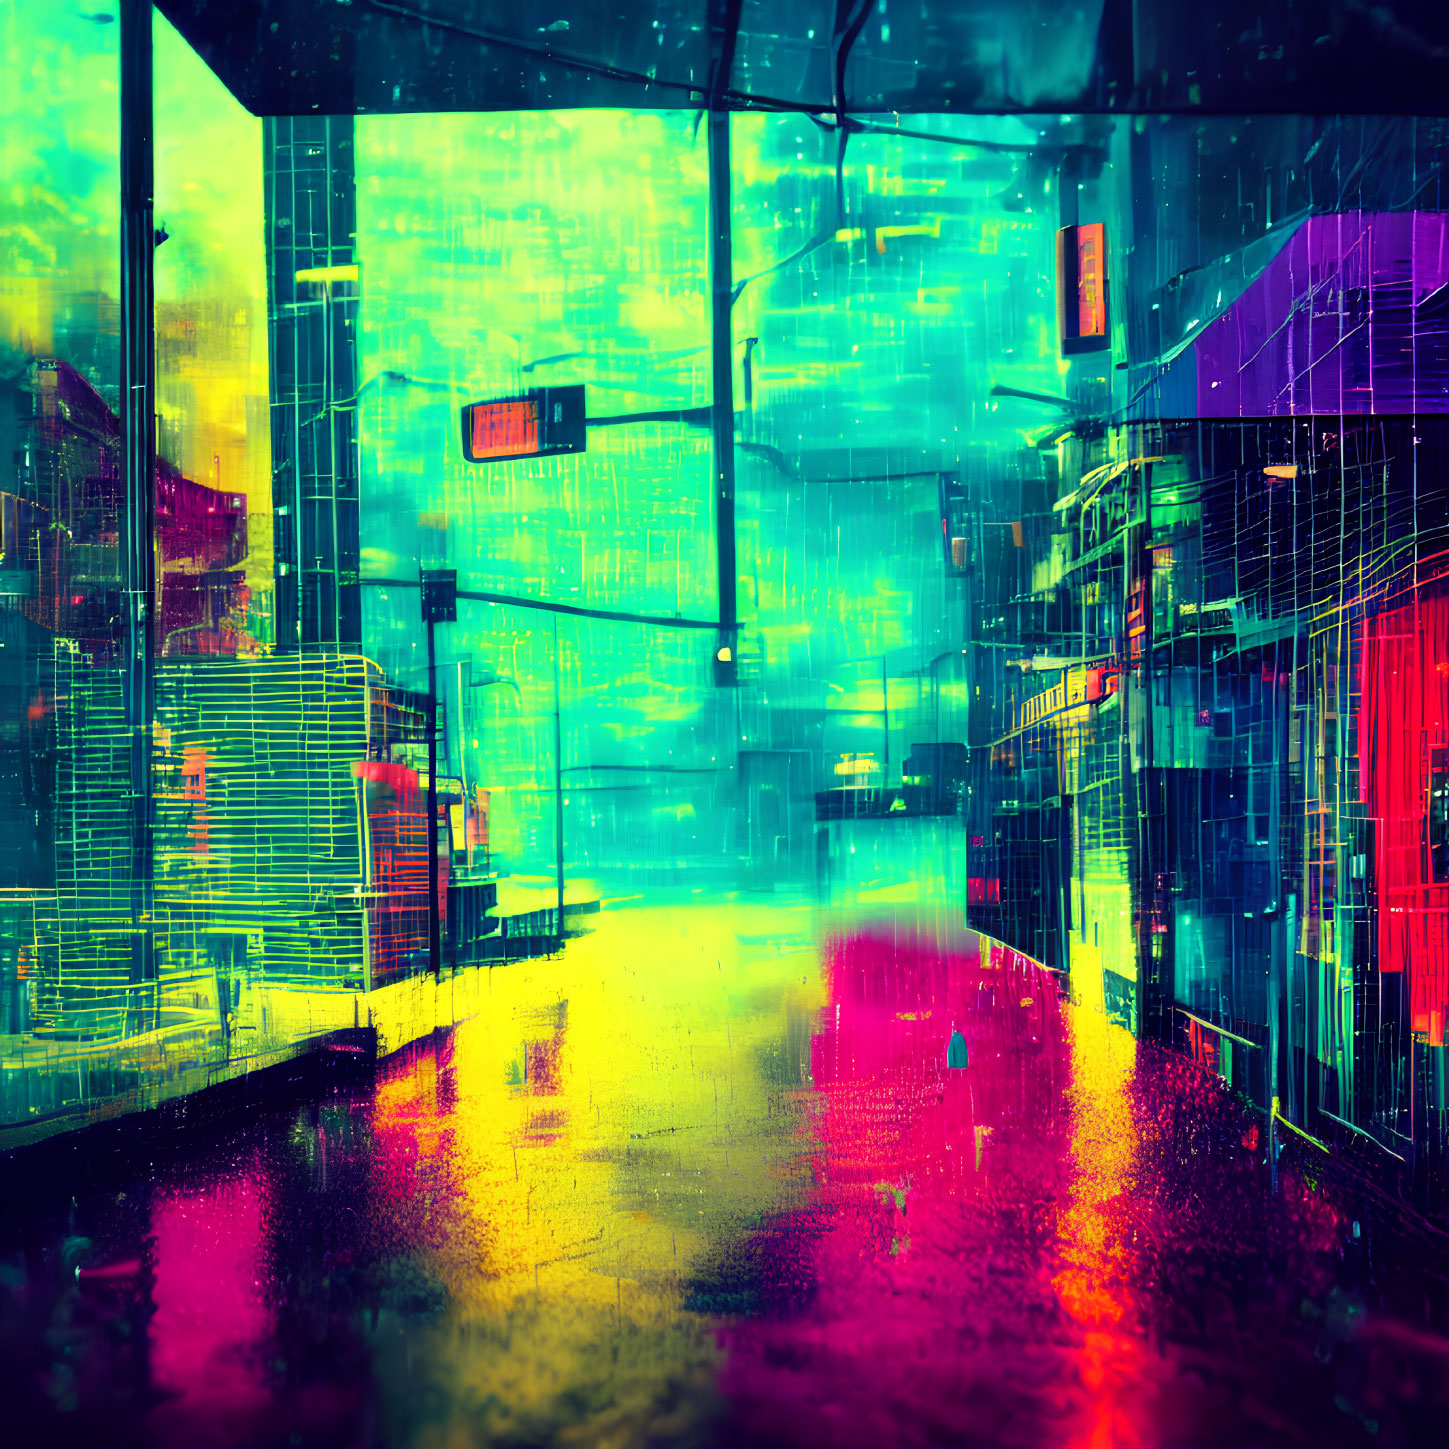 Neon-lit cyberpunk cityscape in rainy reflection